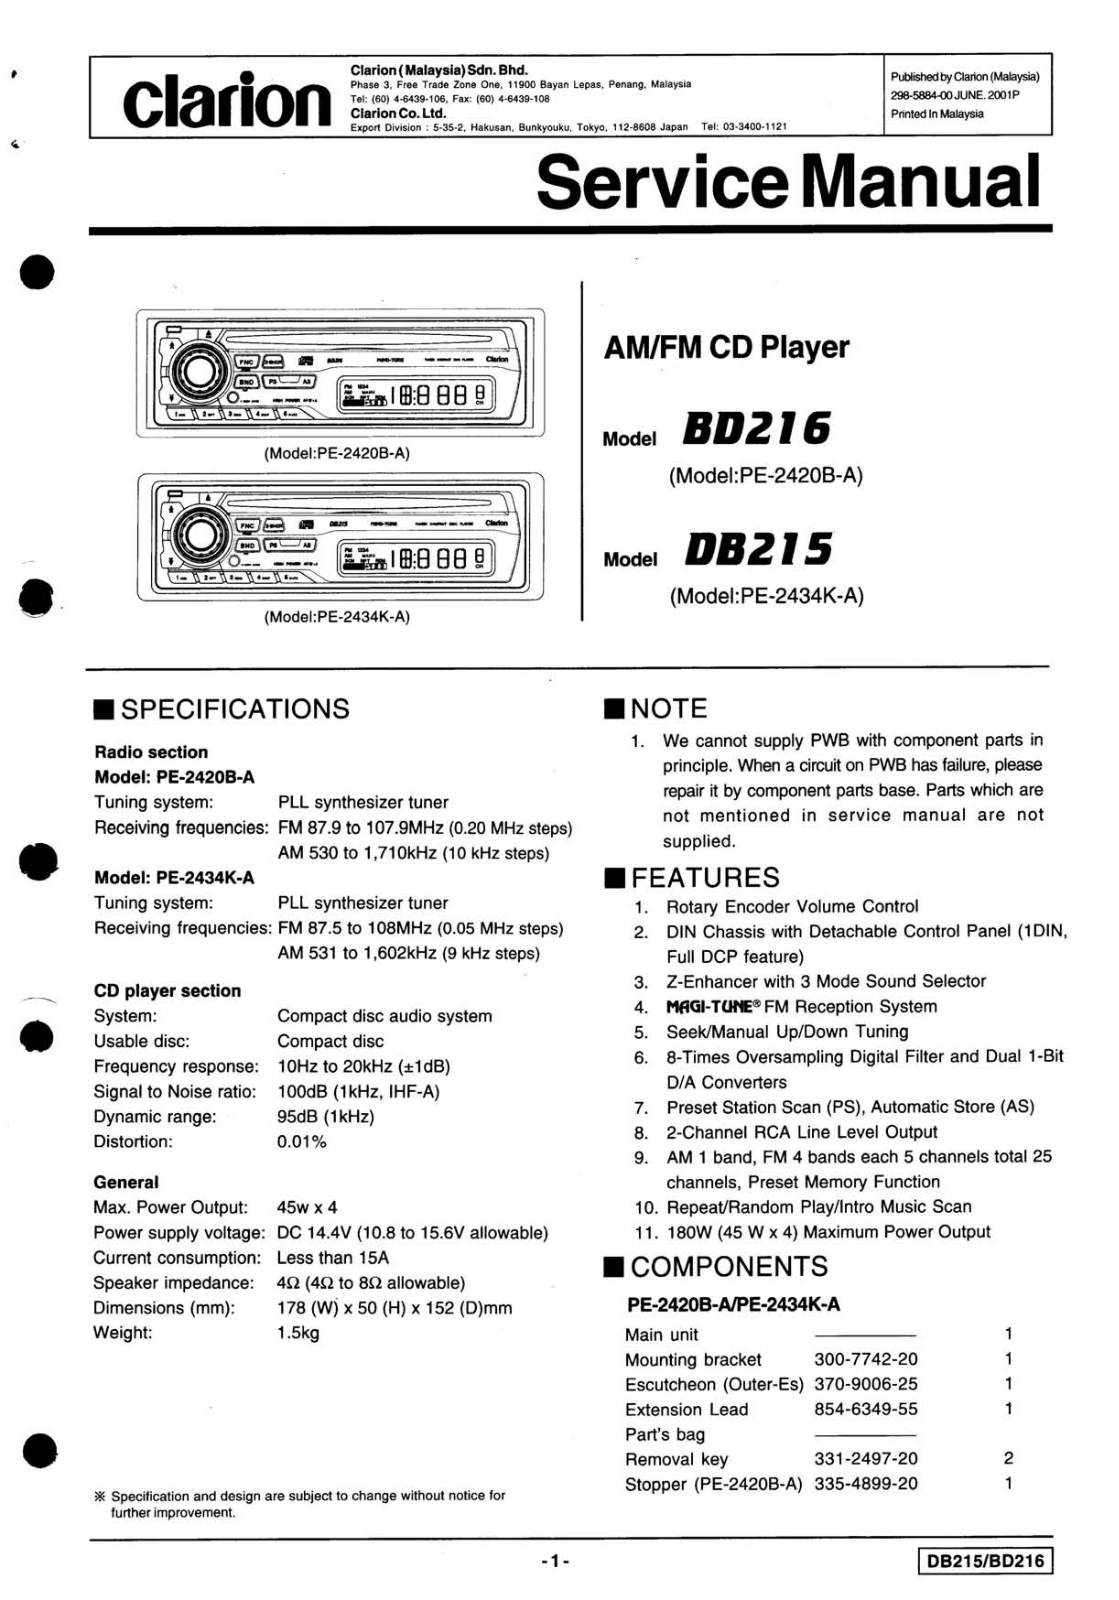 Clarion DB215, BD216 Service Manual